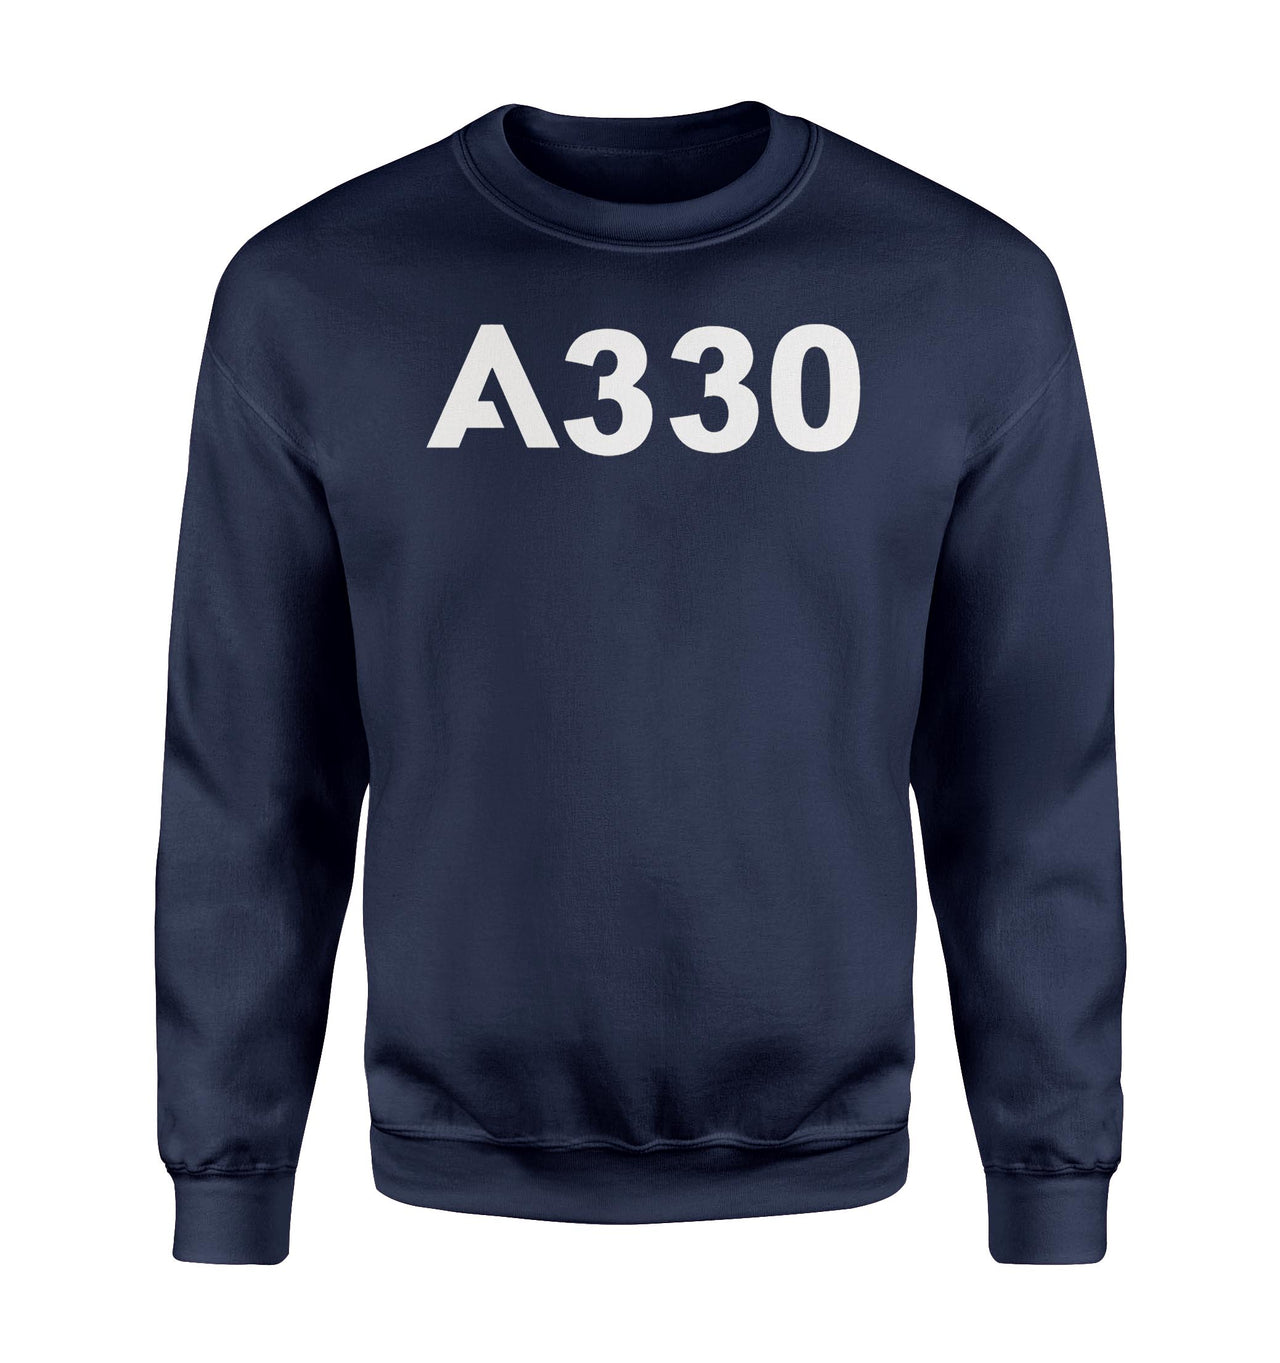 A330 Flat Text Designed Sweatshirts